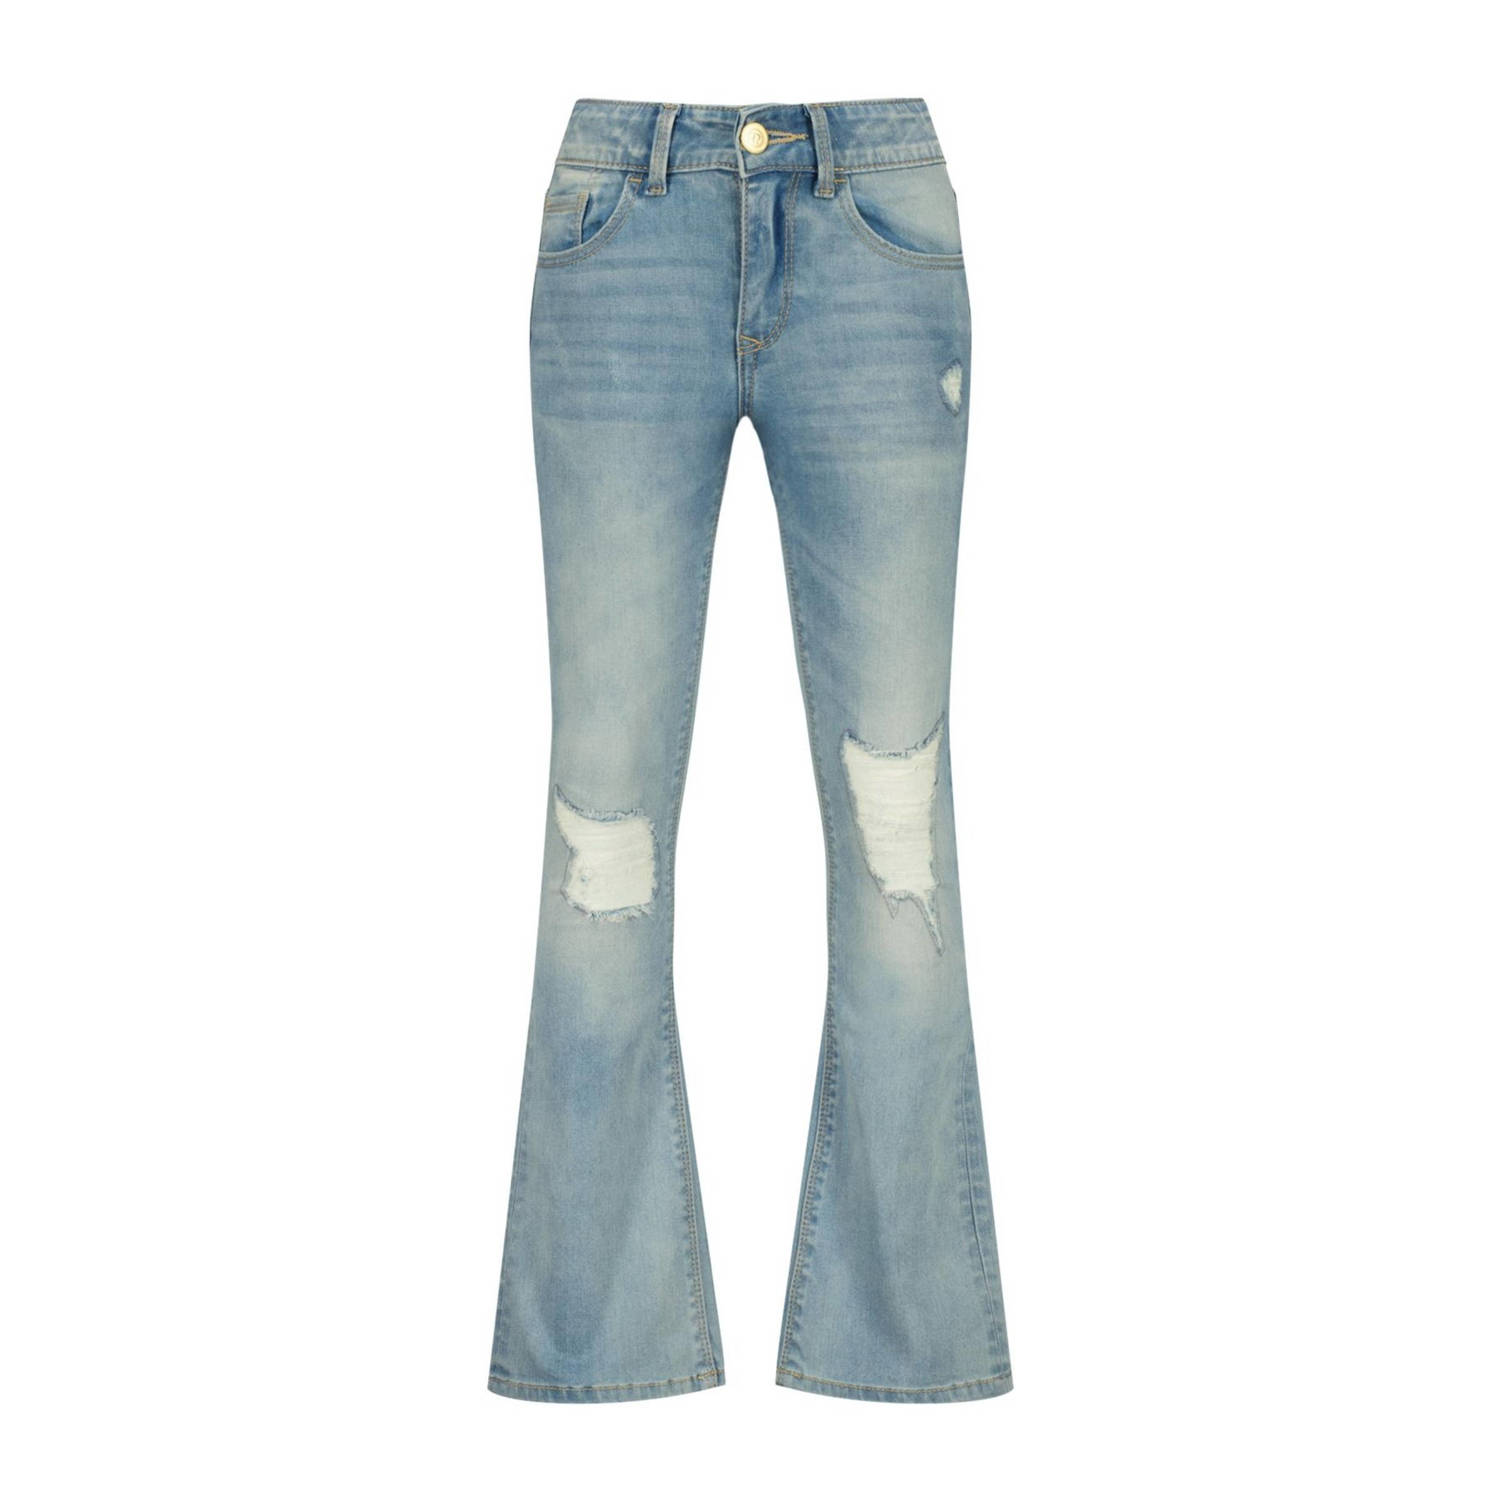 Raizzed flared jeans Melbourne Crafted met slijtage light blue stone